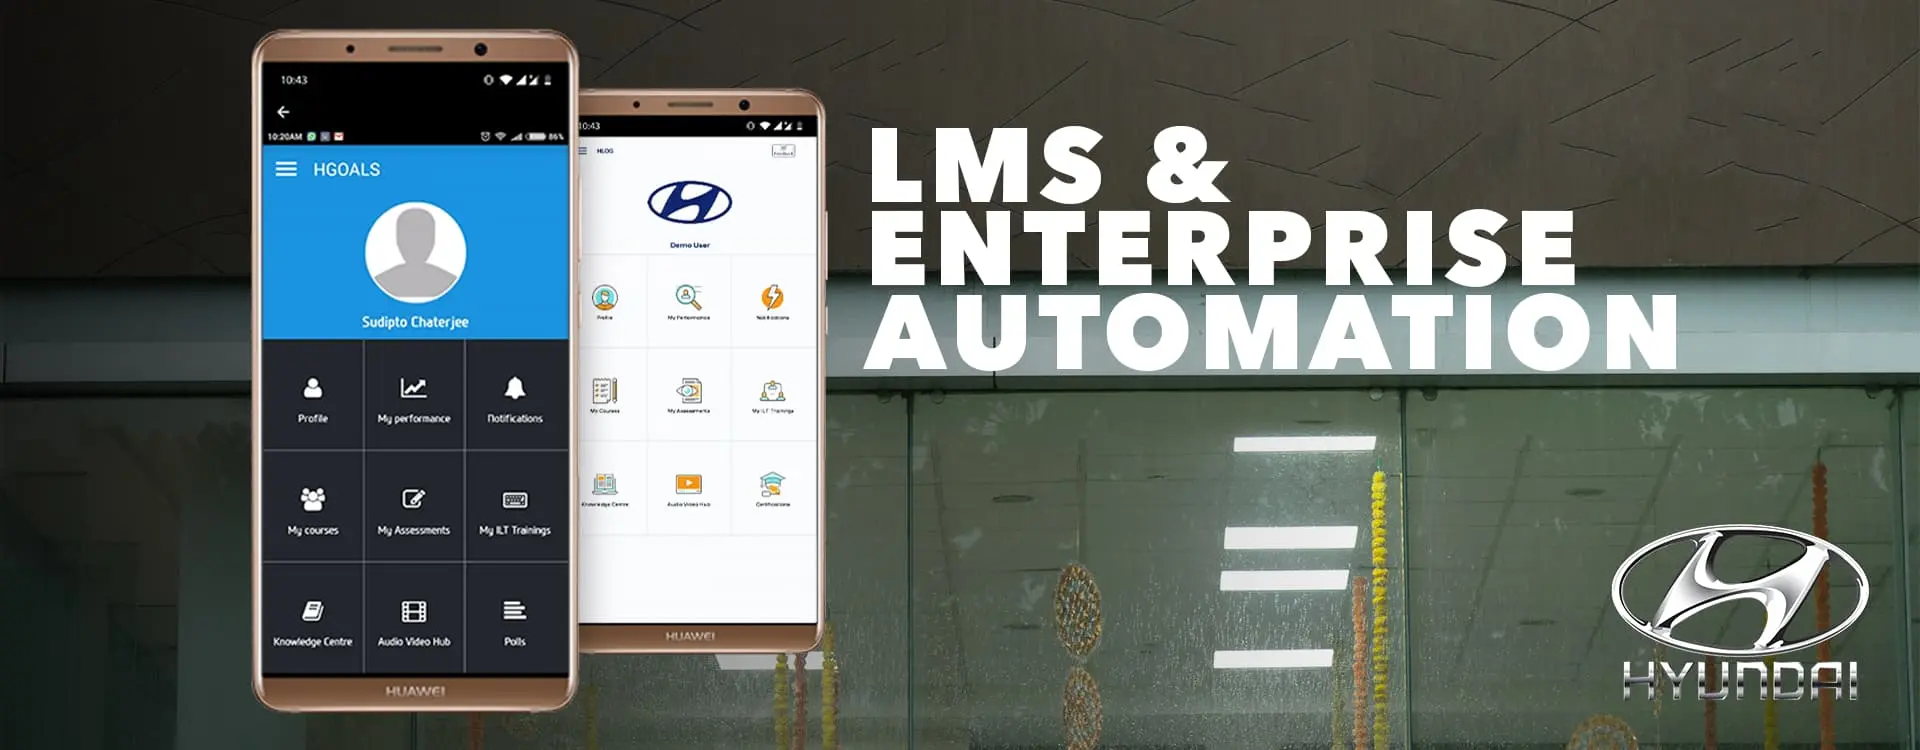 LMS and Enterprise Automation mobile application